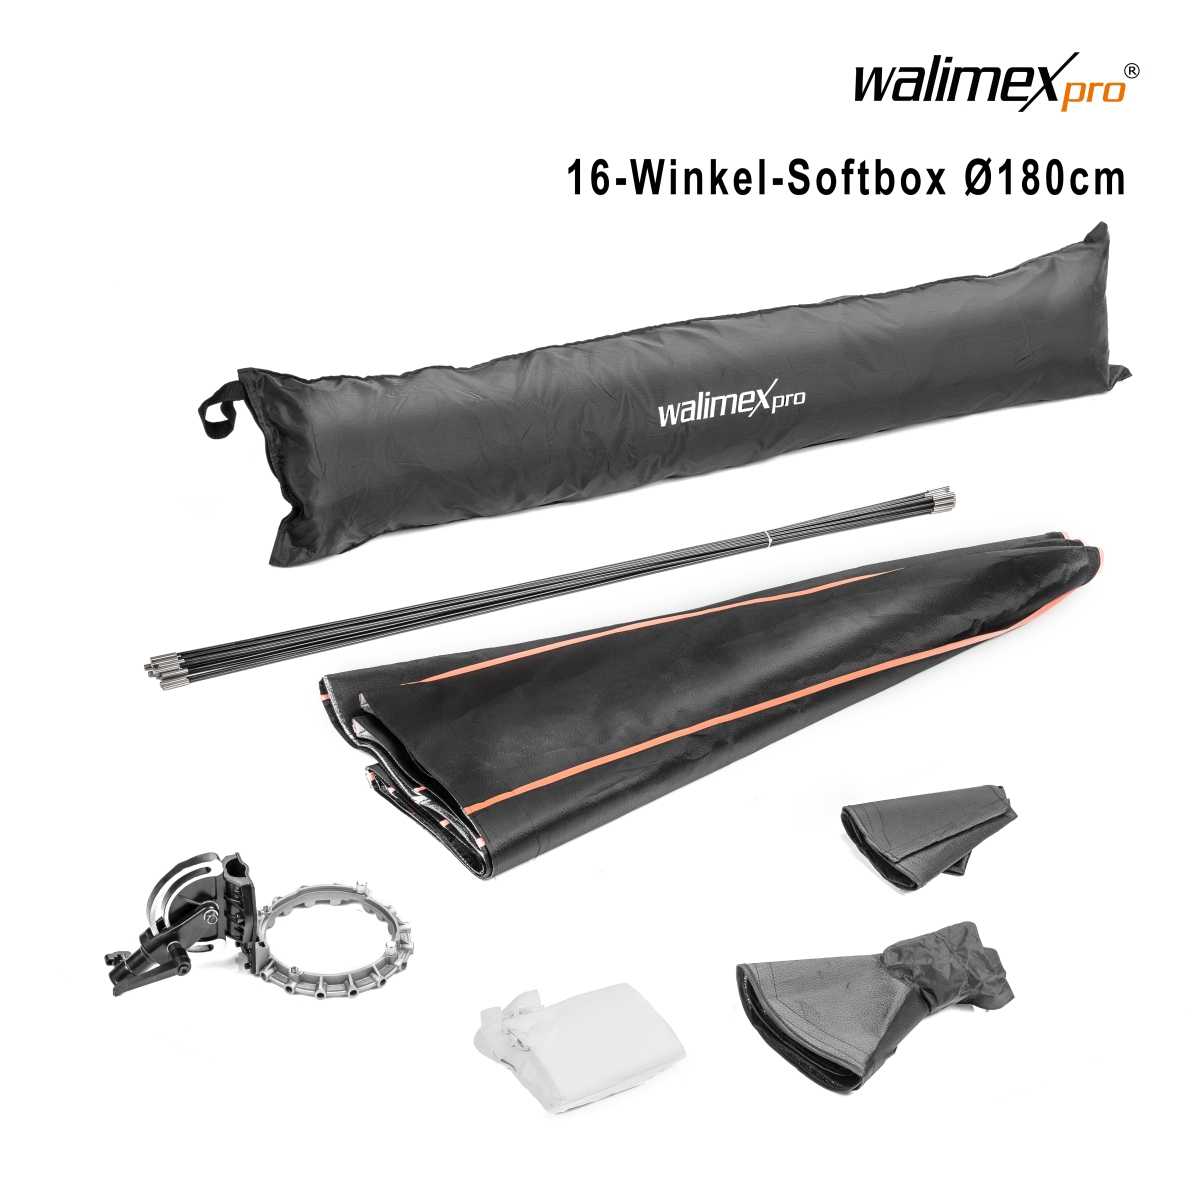 Walimex 16-Winkel-Softbox Ø 180 cm für Walimex pro & K 